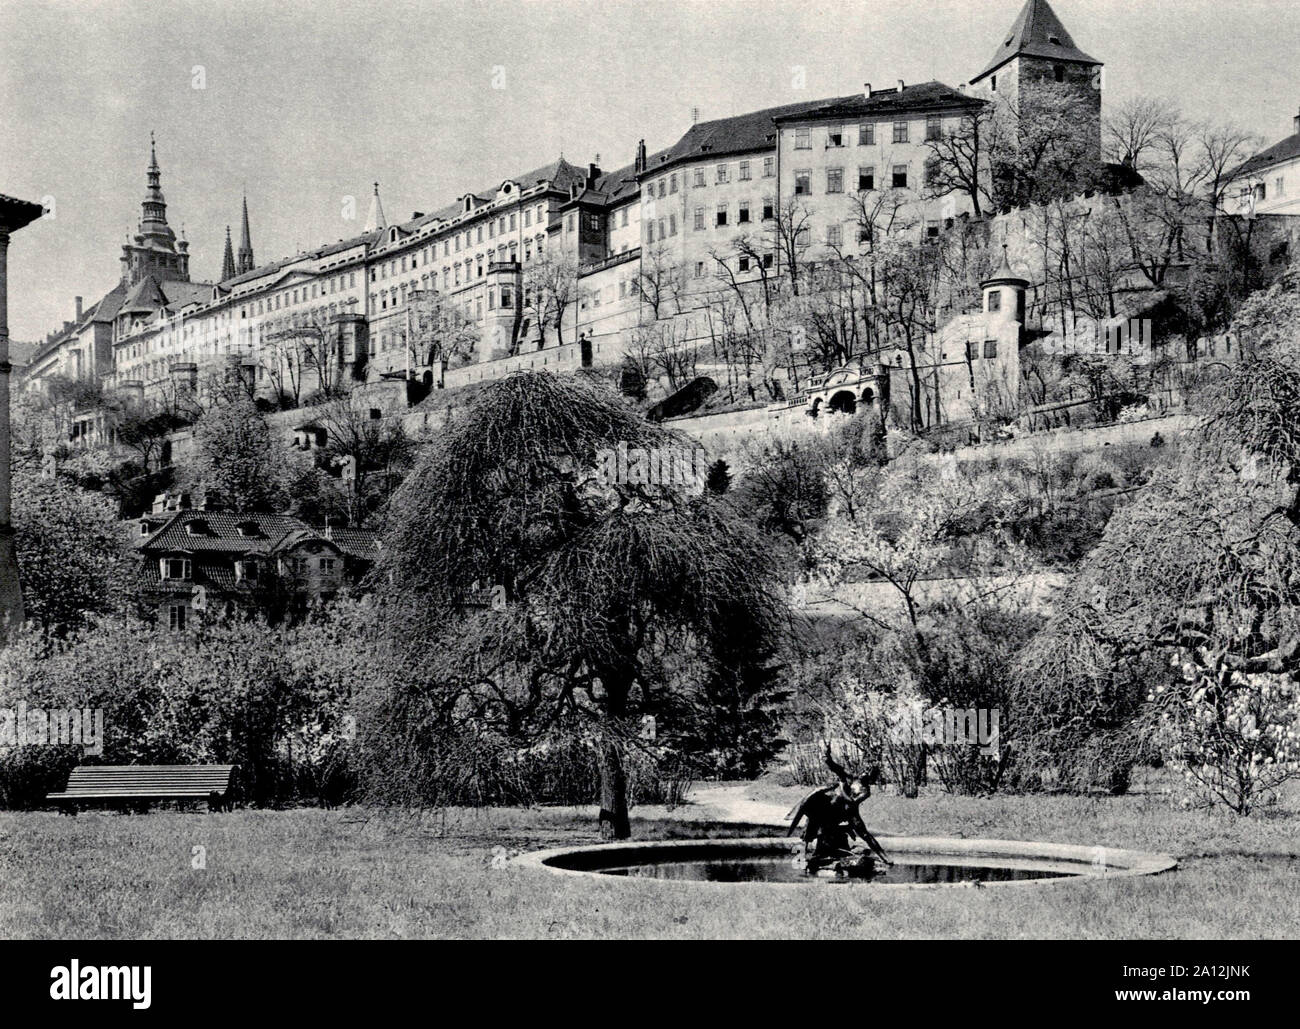 CZECHOSLOVAKIA, Prague 1961: Photograph showing architecture of prague ...